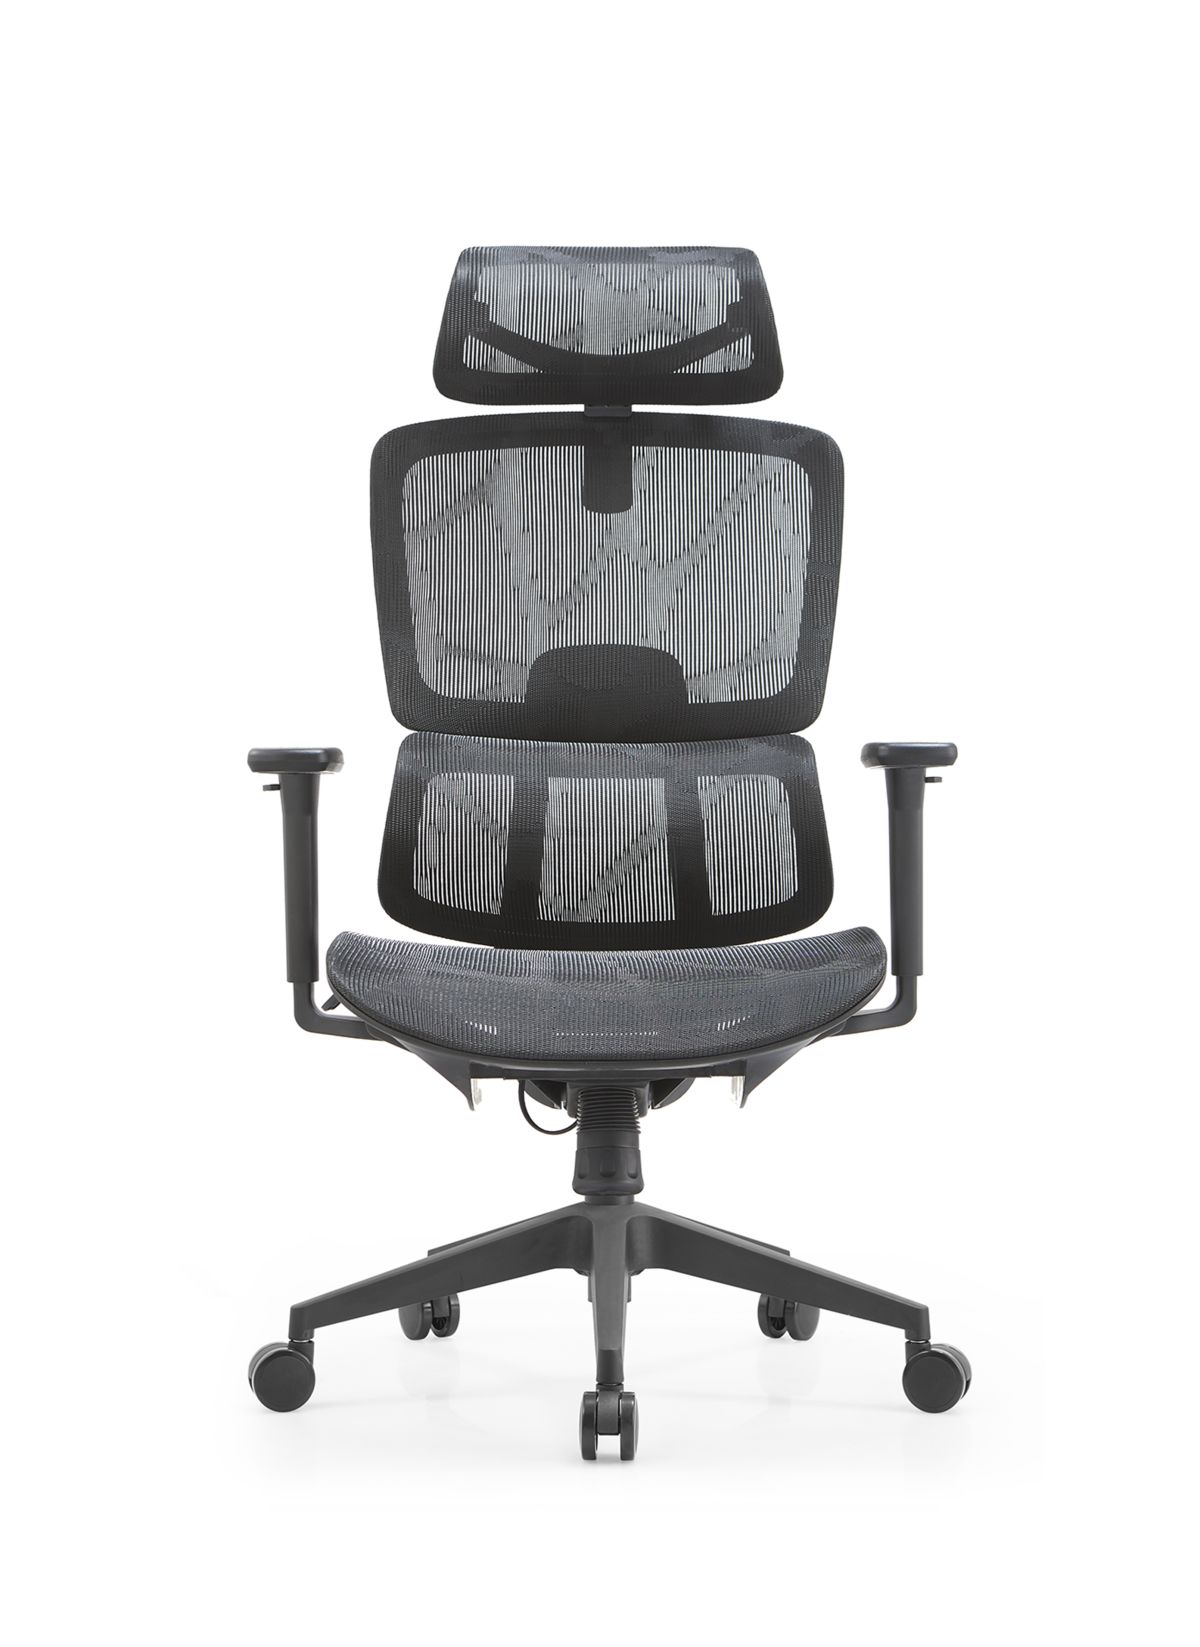 Herman Miller Ergonomic Chair (1)